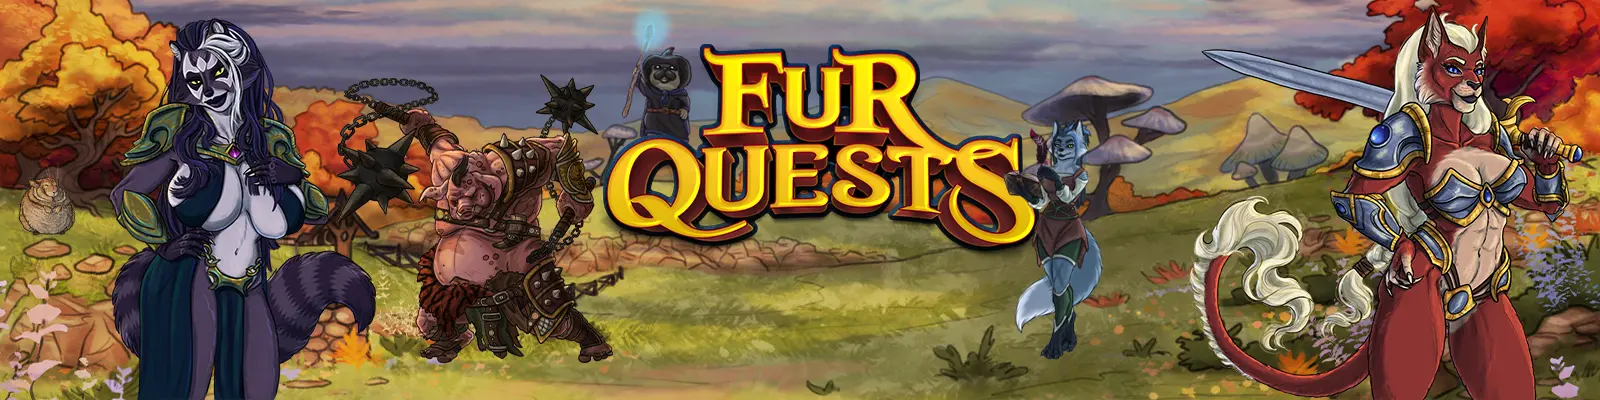 Fur Quests main image